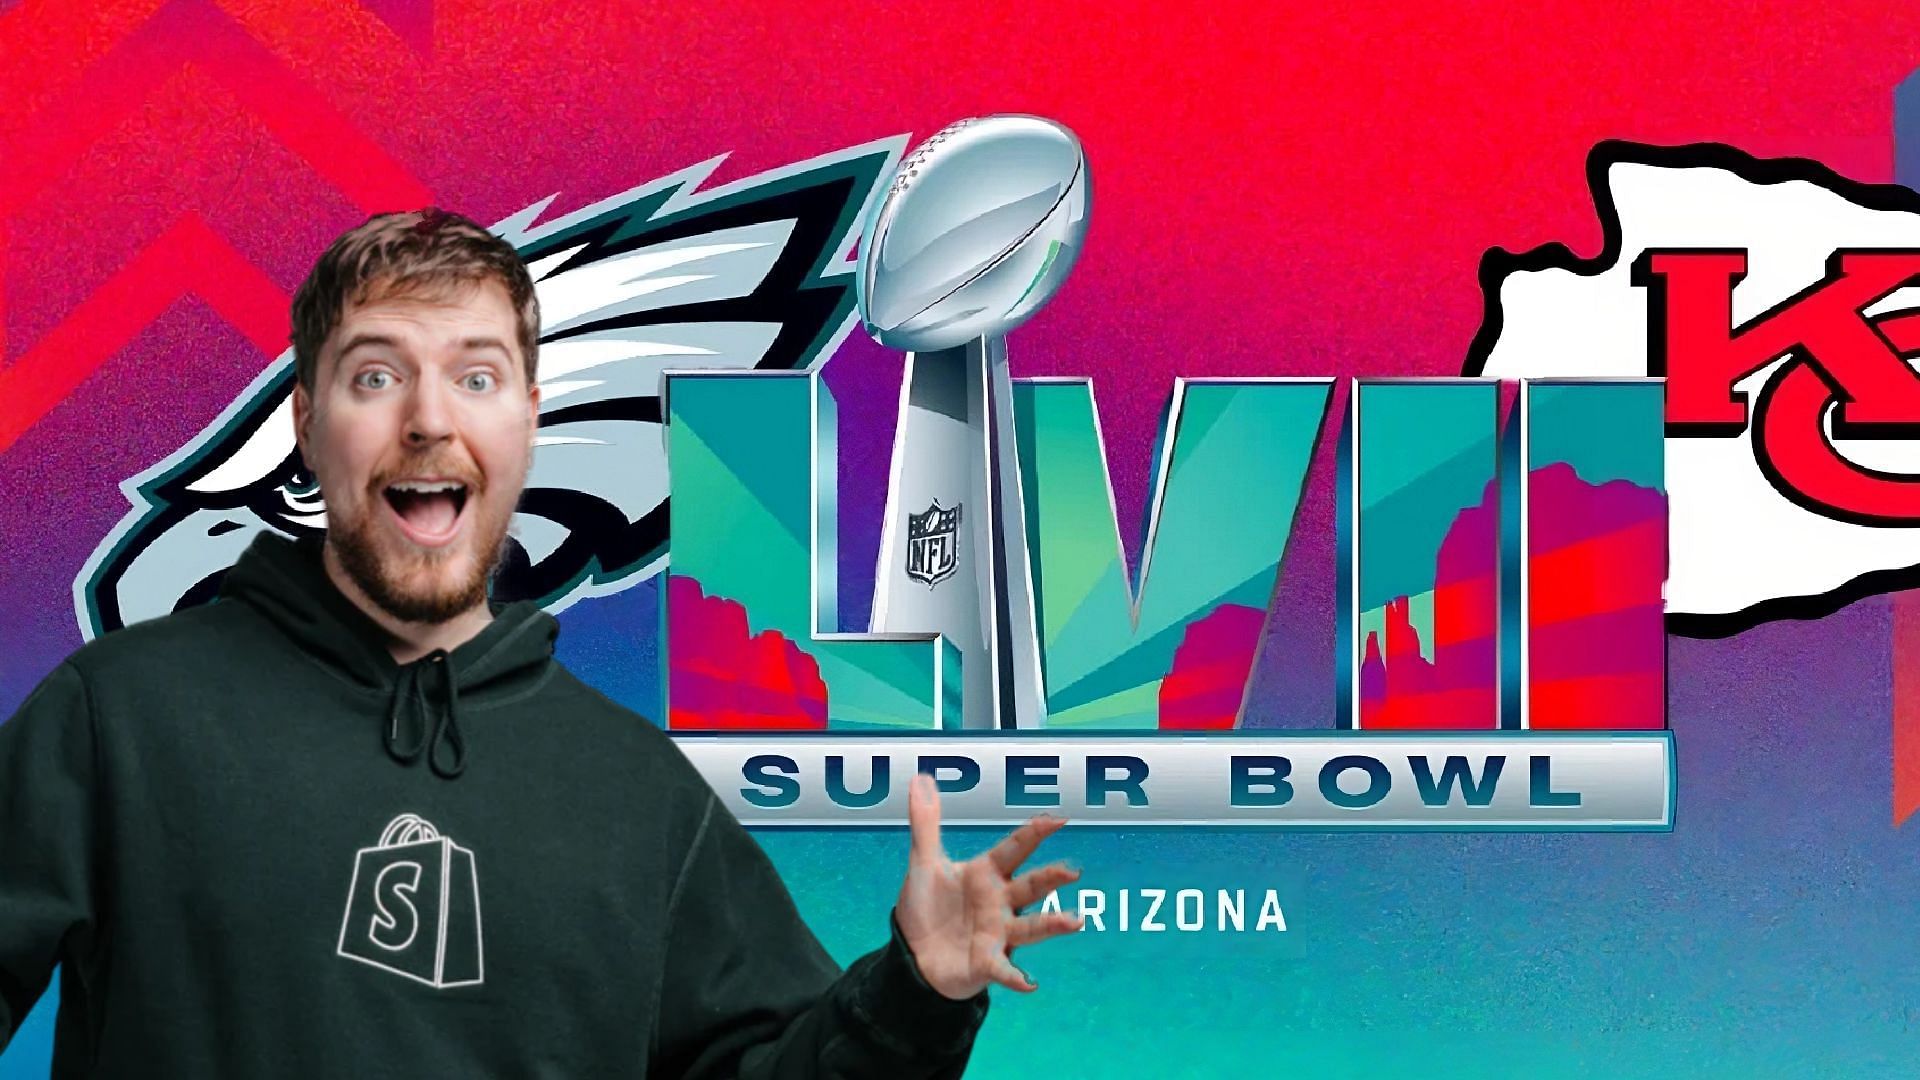 MrBeast to star in a Super Bowl Ad (Image via Sportskeeda)